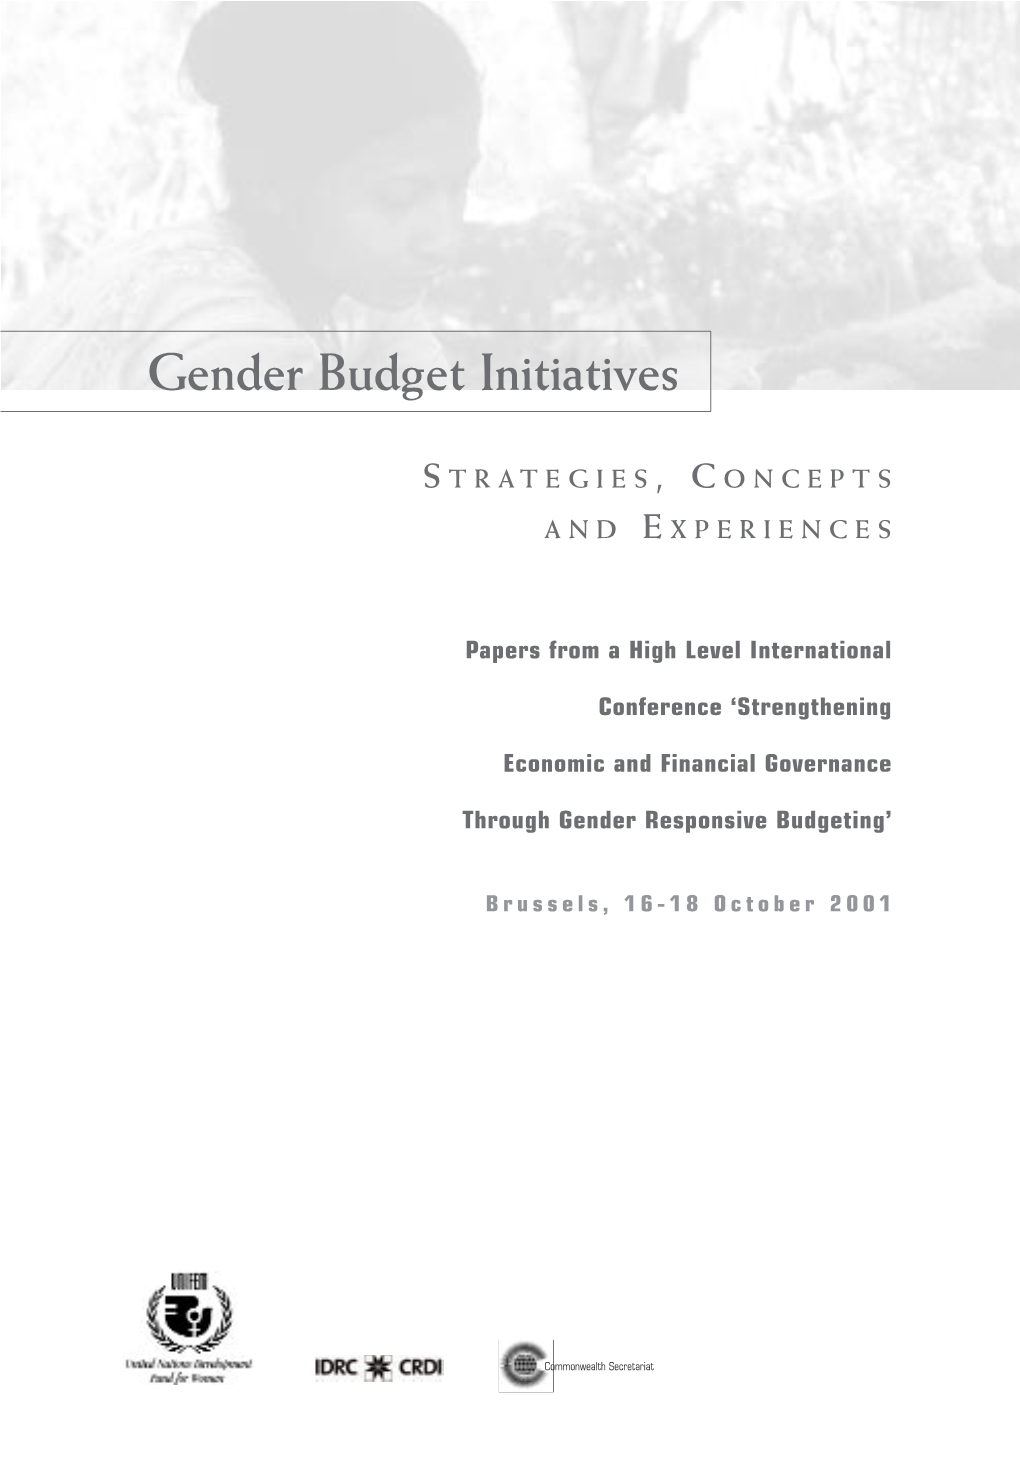 Gender Budget Initiatives